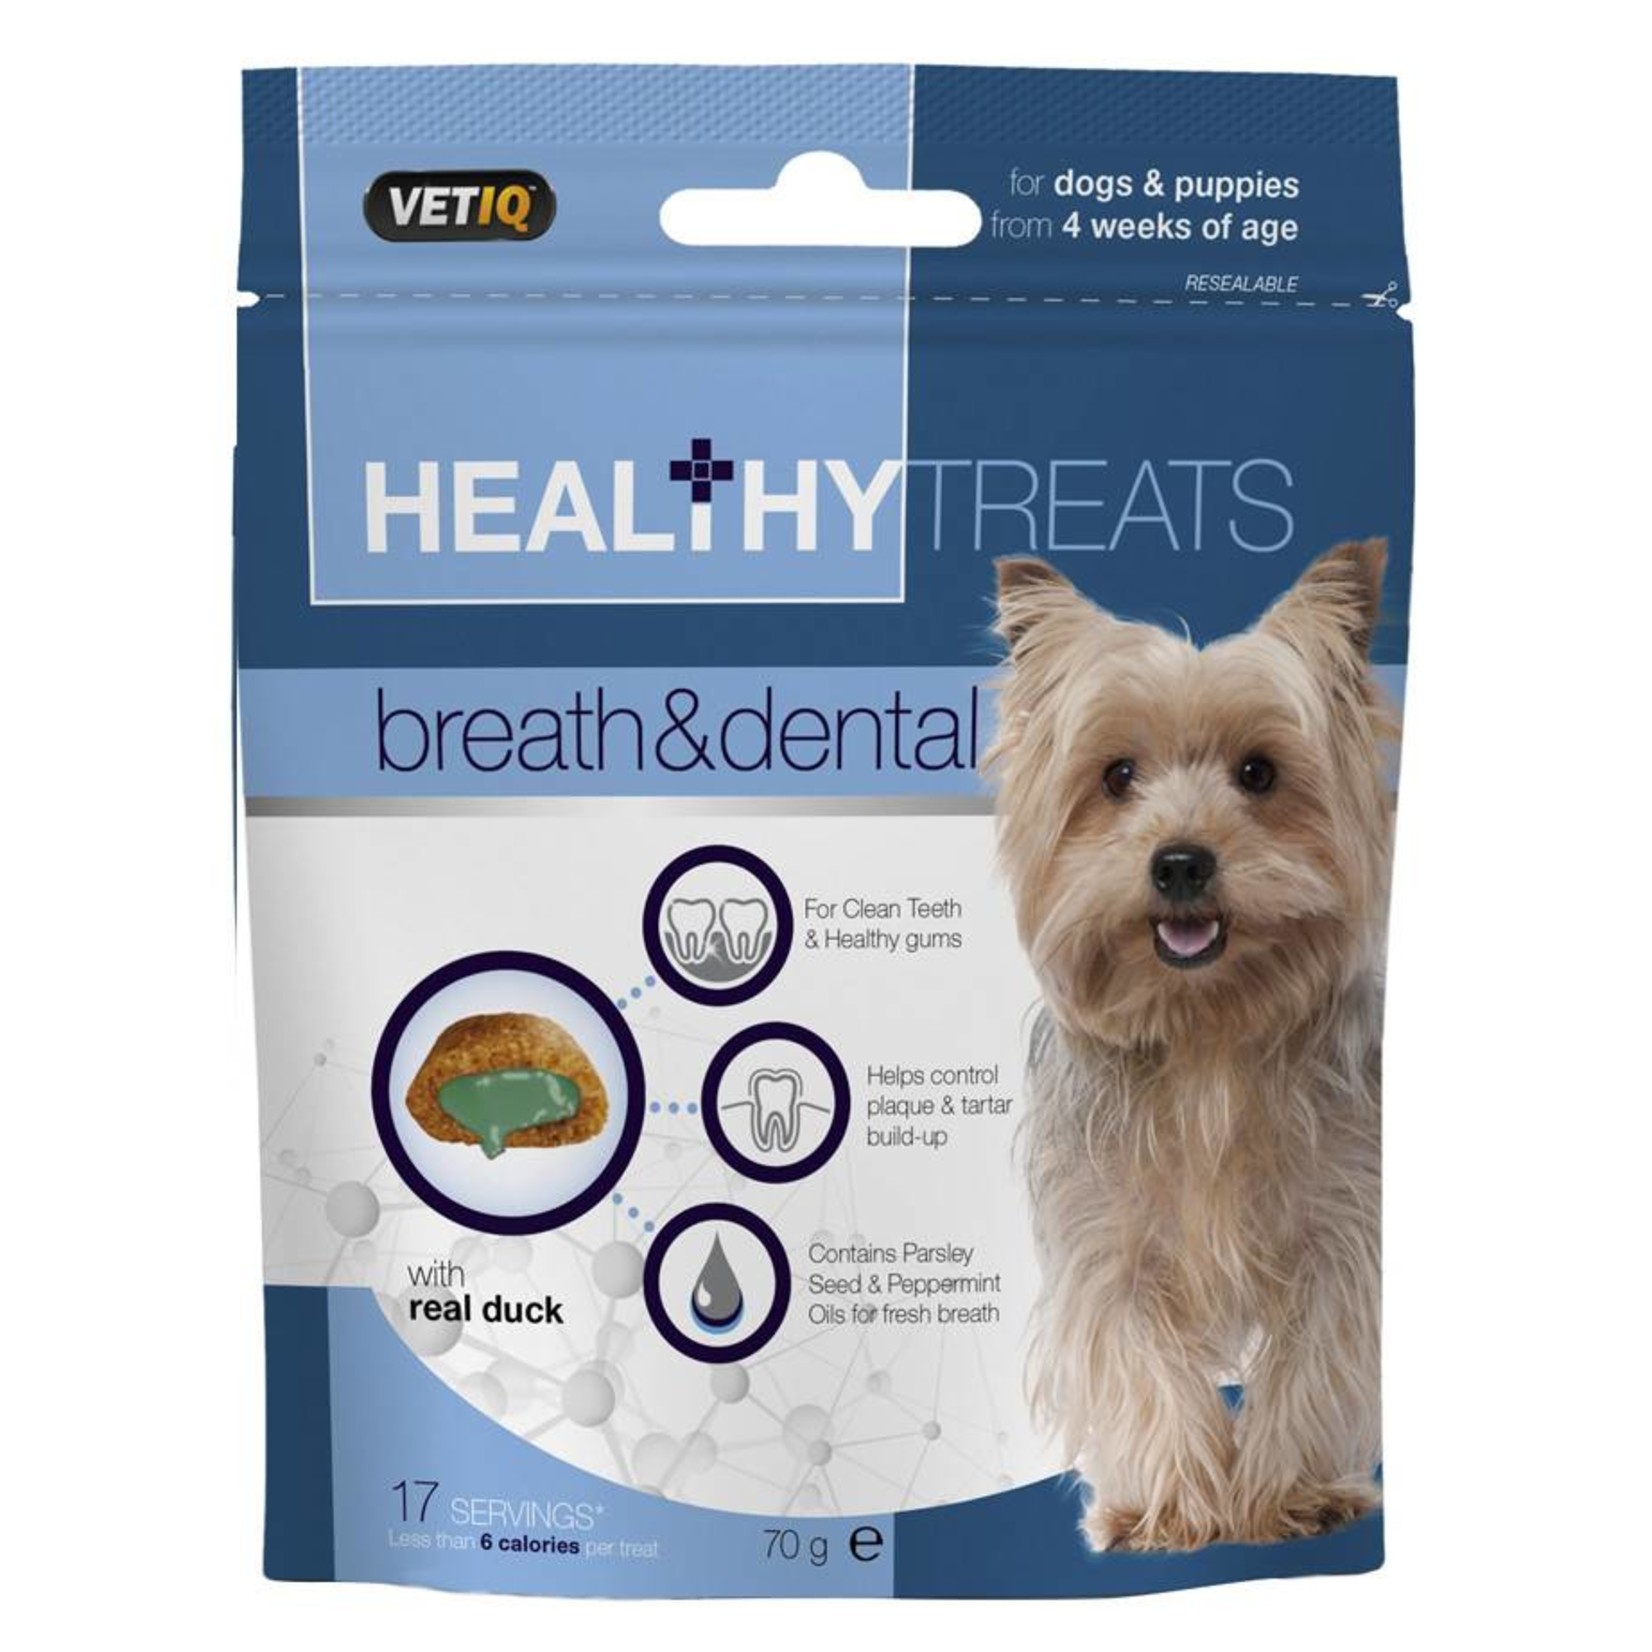 Mark & Chappell VetIQ VetIQ Healthy Treats Breath & Dental for Dogs & Puppies, 70g